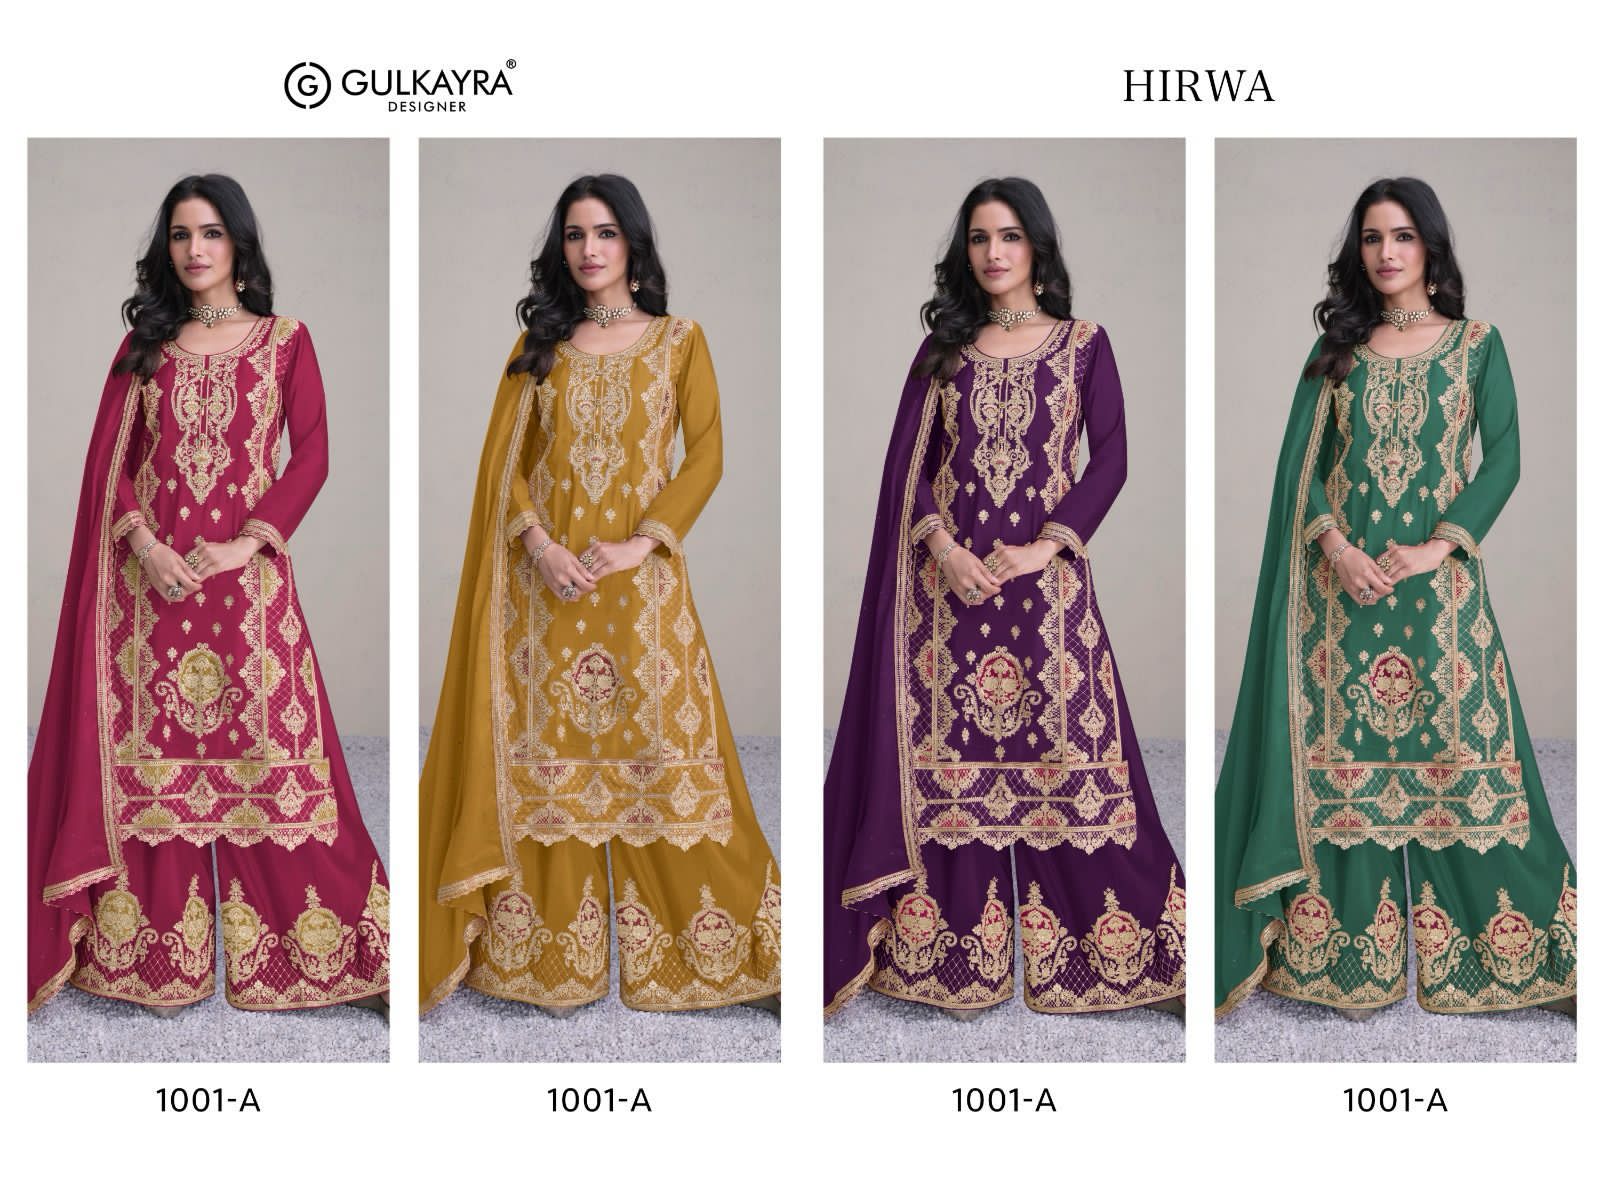 Gulkayra Hirwa collection 3